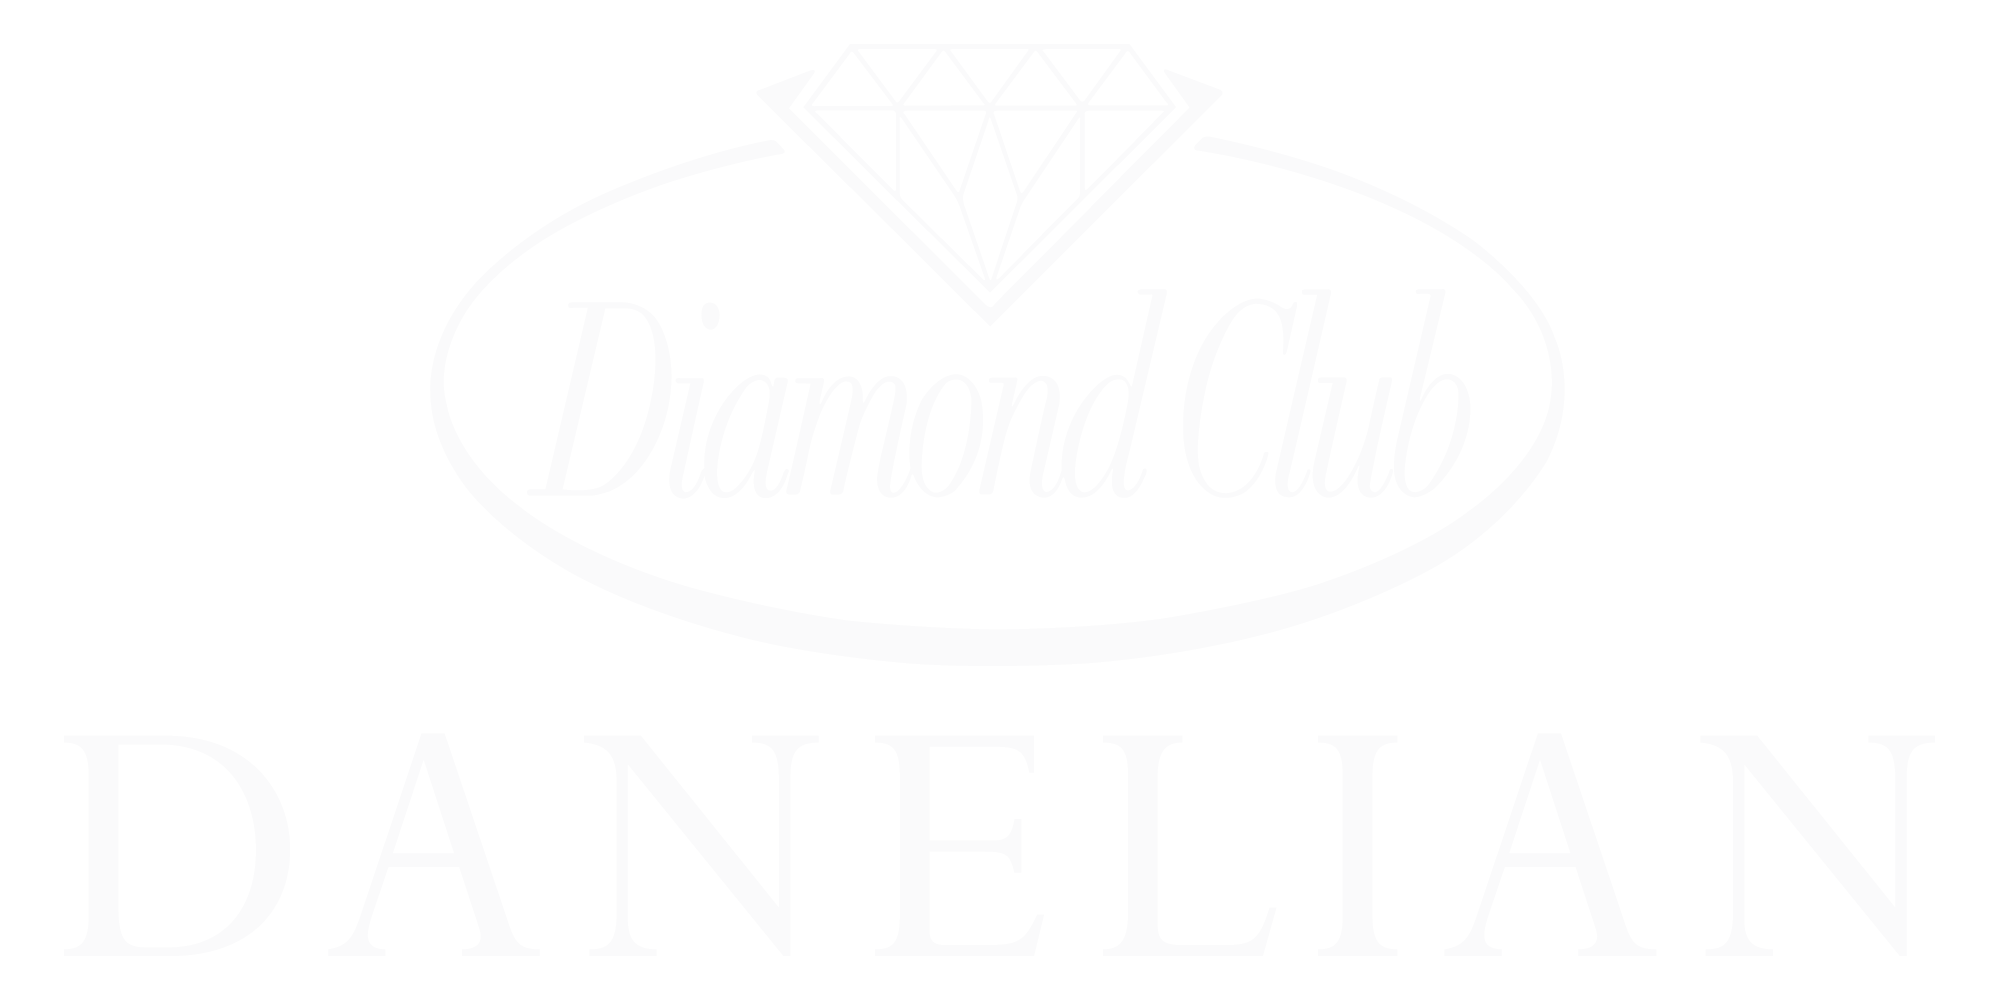 Diamond Club Logo - DANELIAN Diamond Club